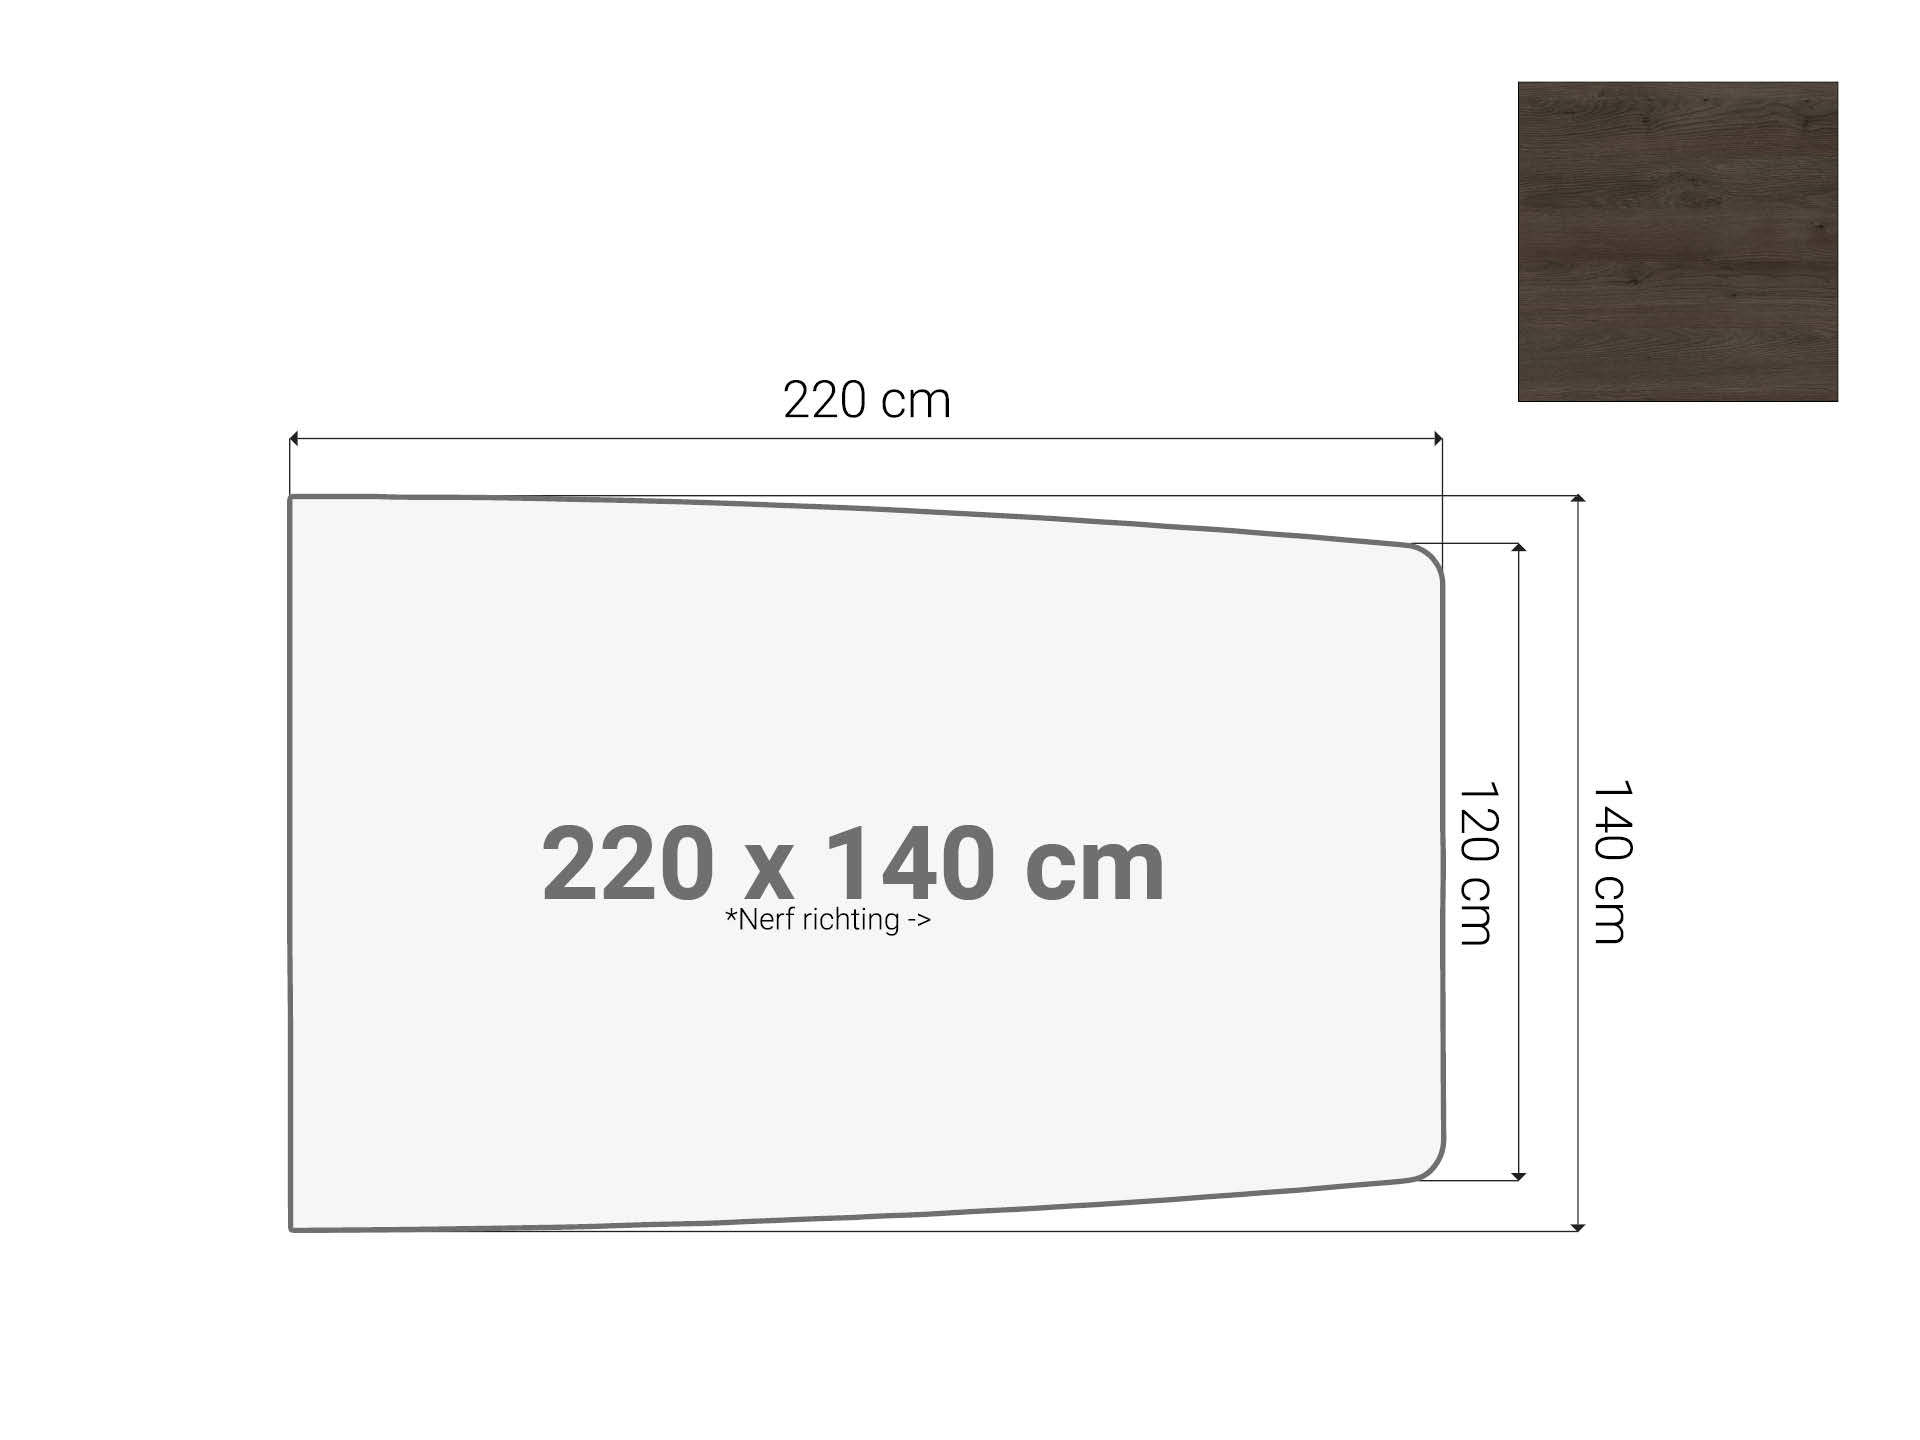 Half bootvormig vergadertafel blad Donker Sepia 220x140 cm